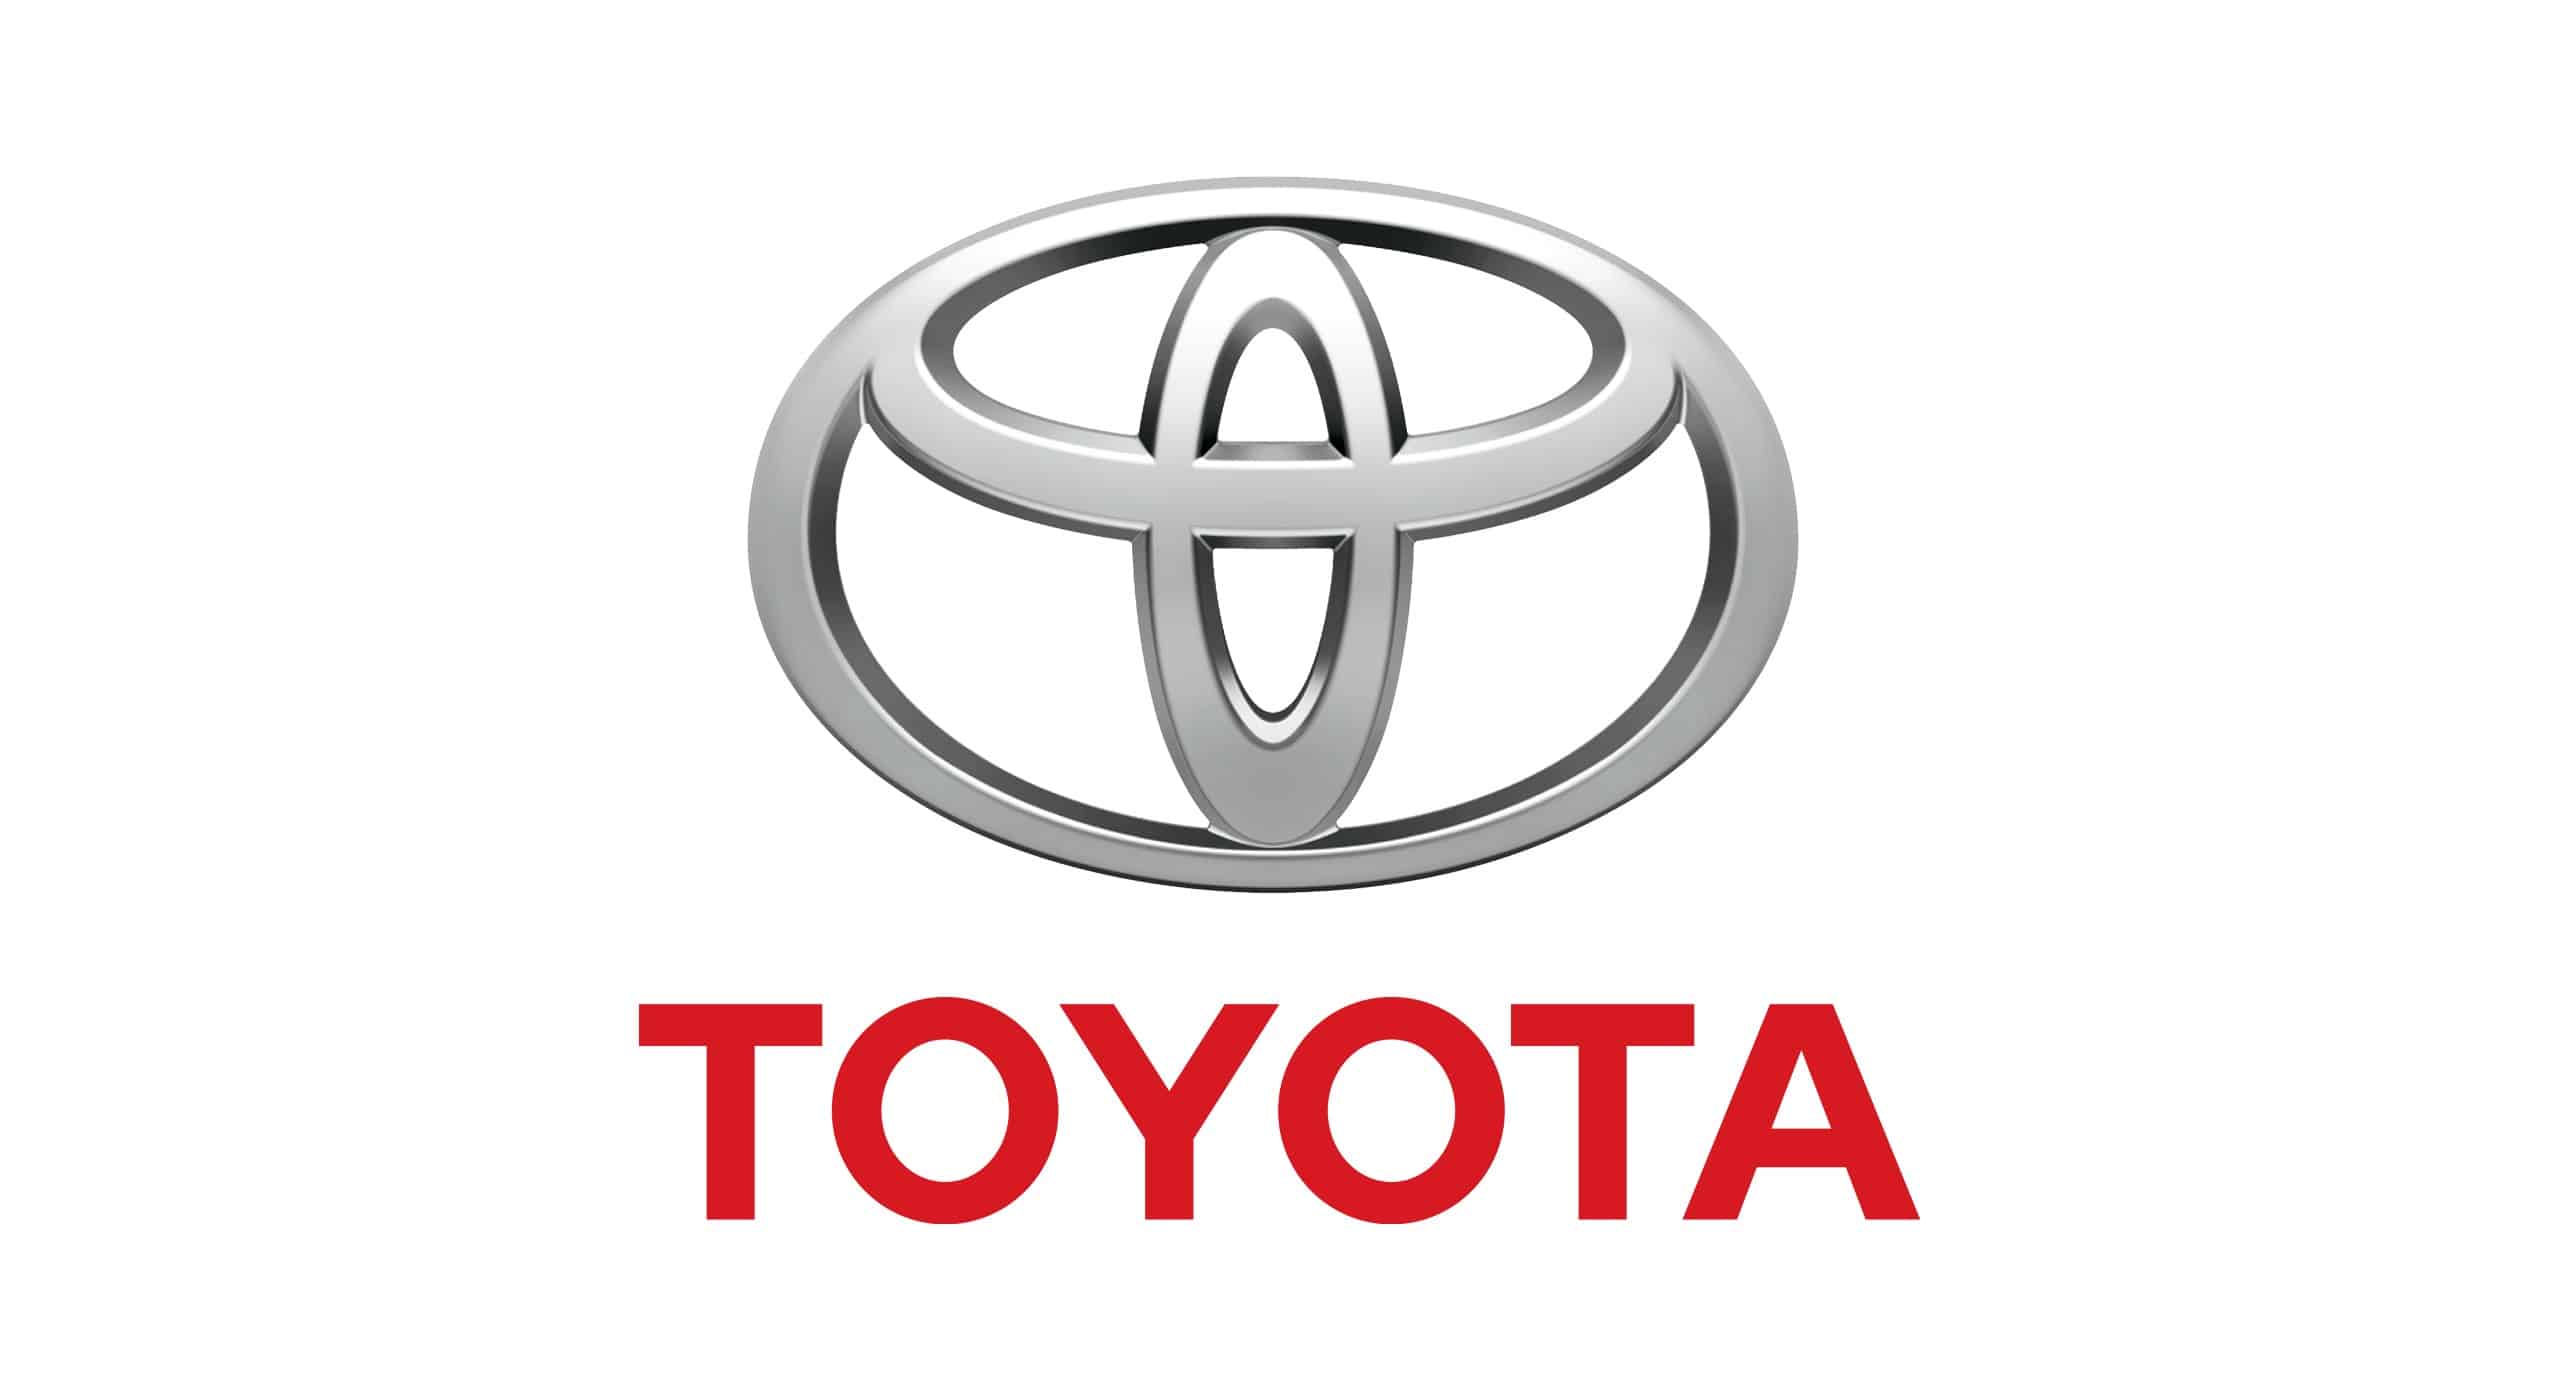 Comment contacter Toyota service client ?